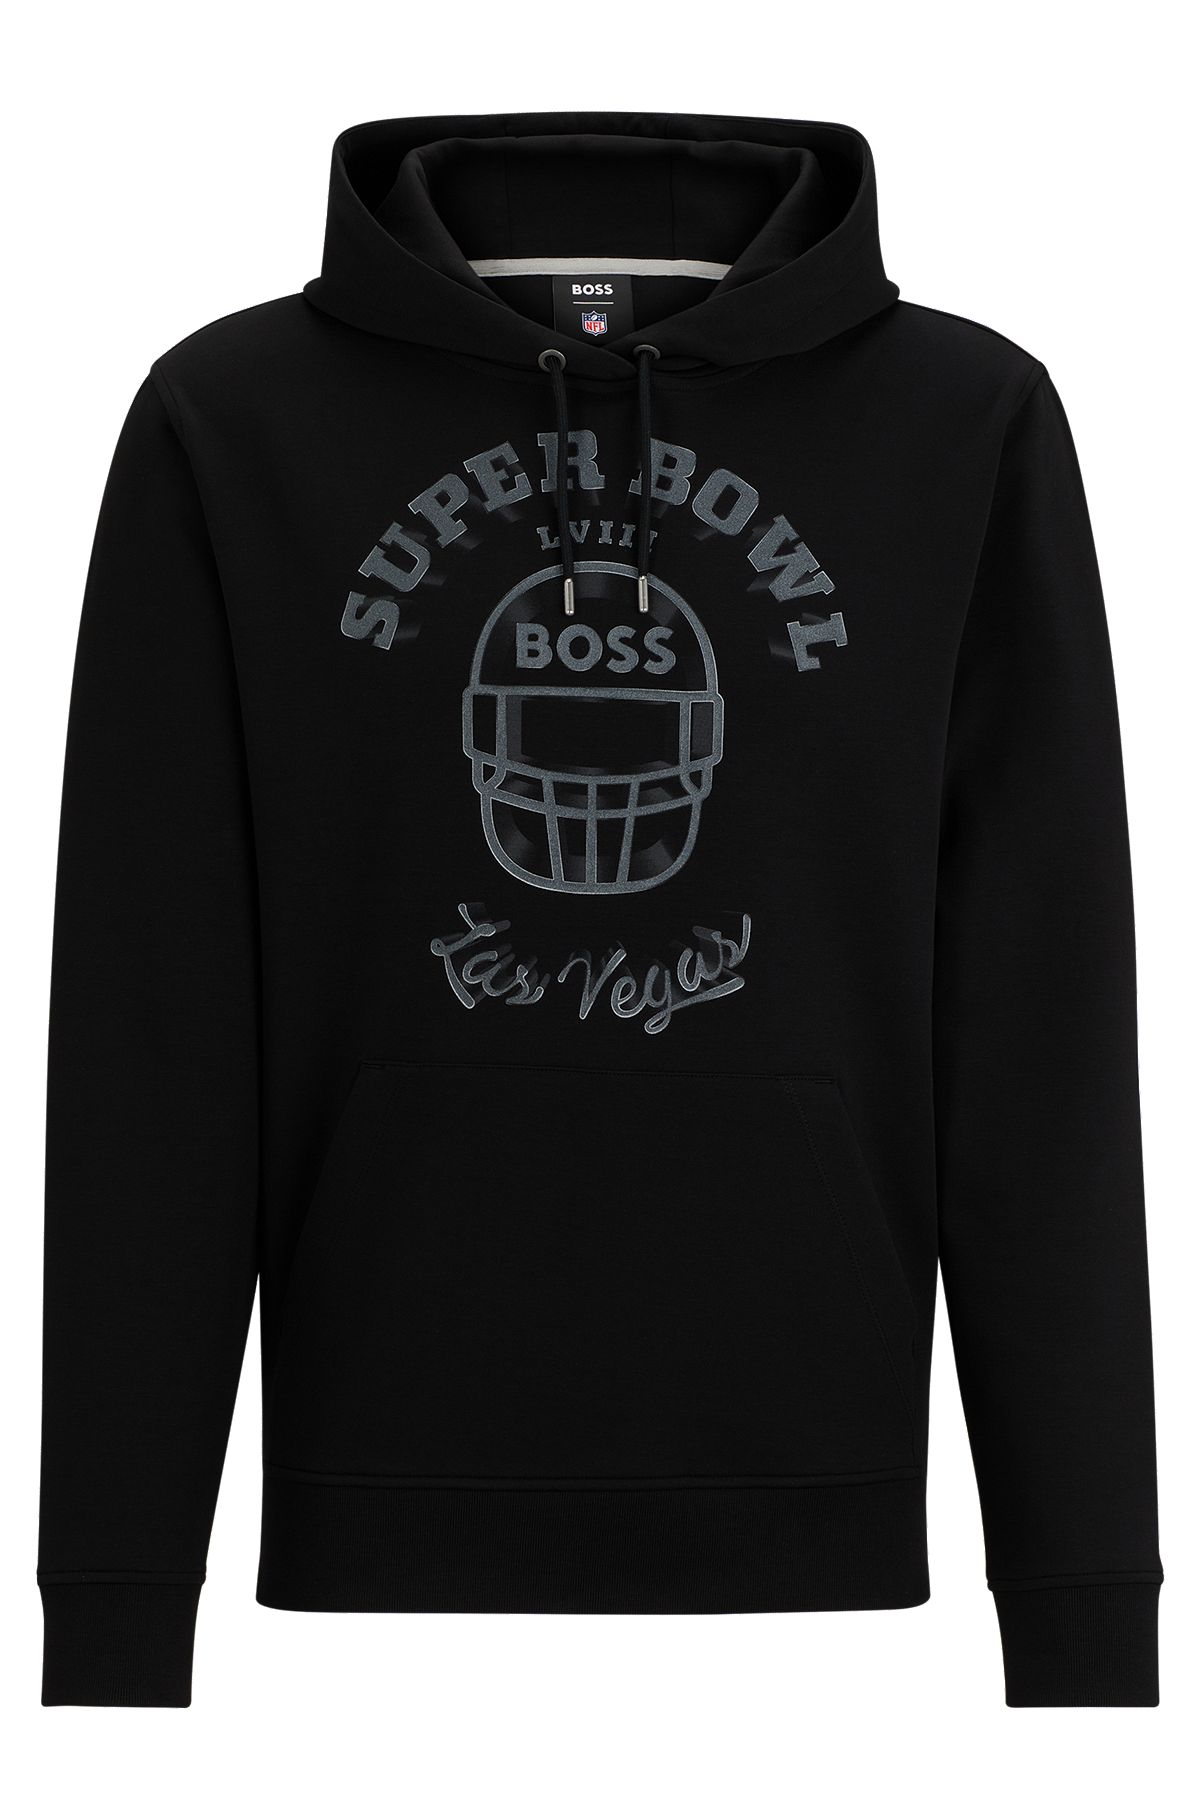 BOSS x NFL cotton-blend hoodie with metallic print, Black